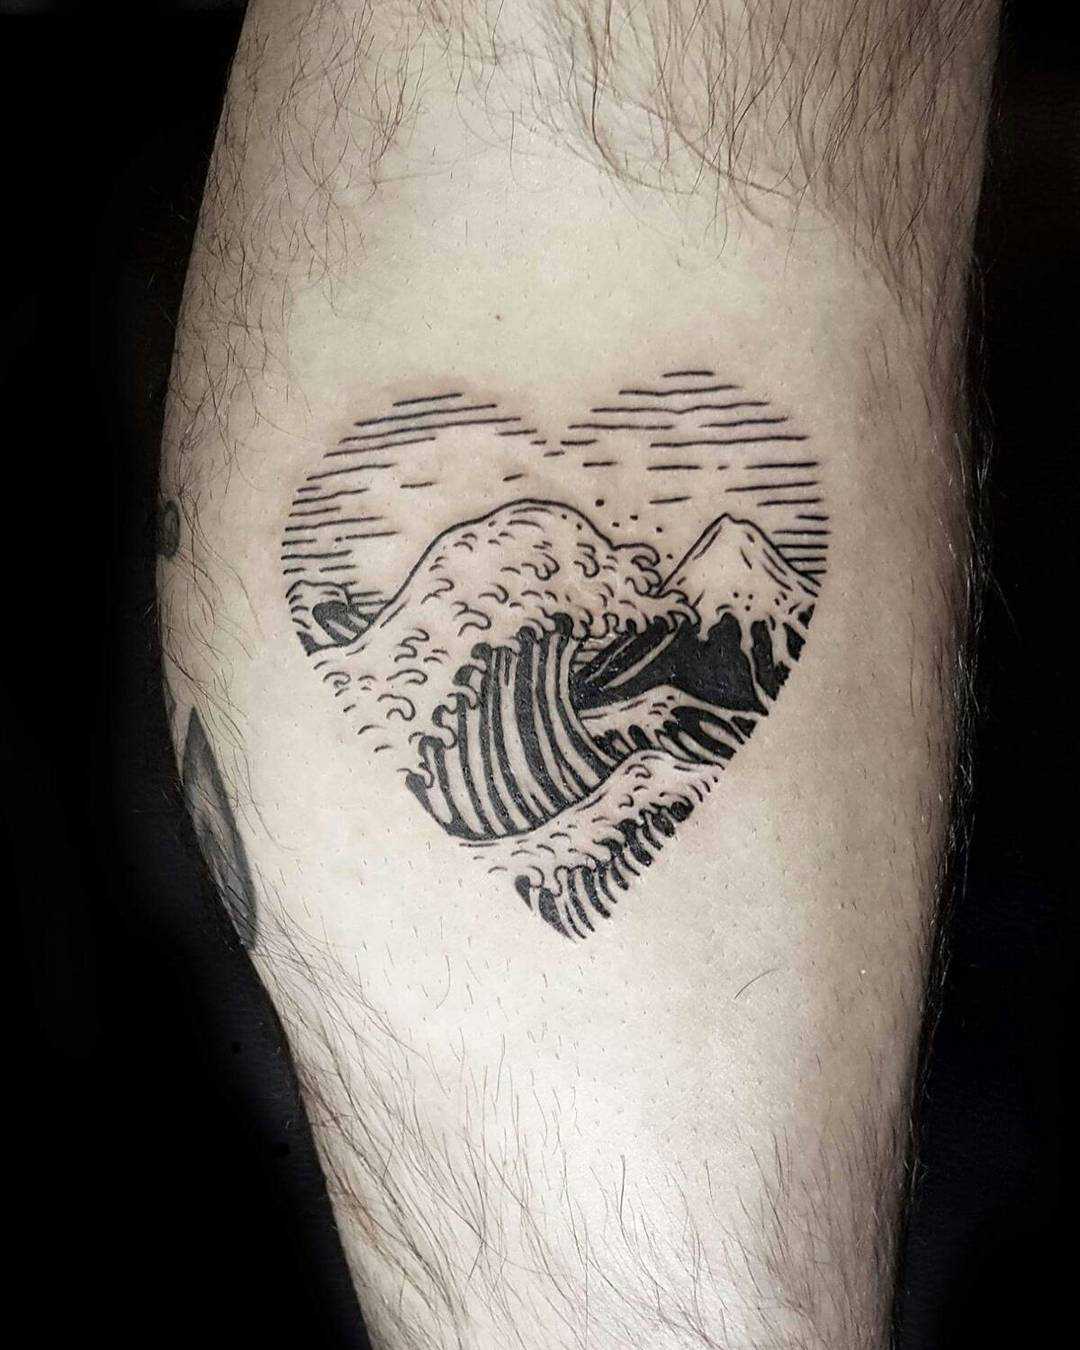 The heart wave tattoo